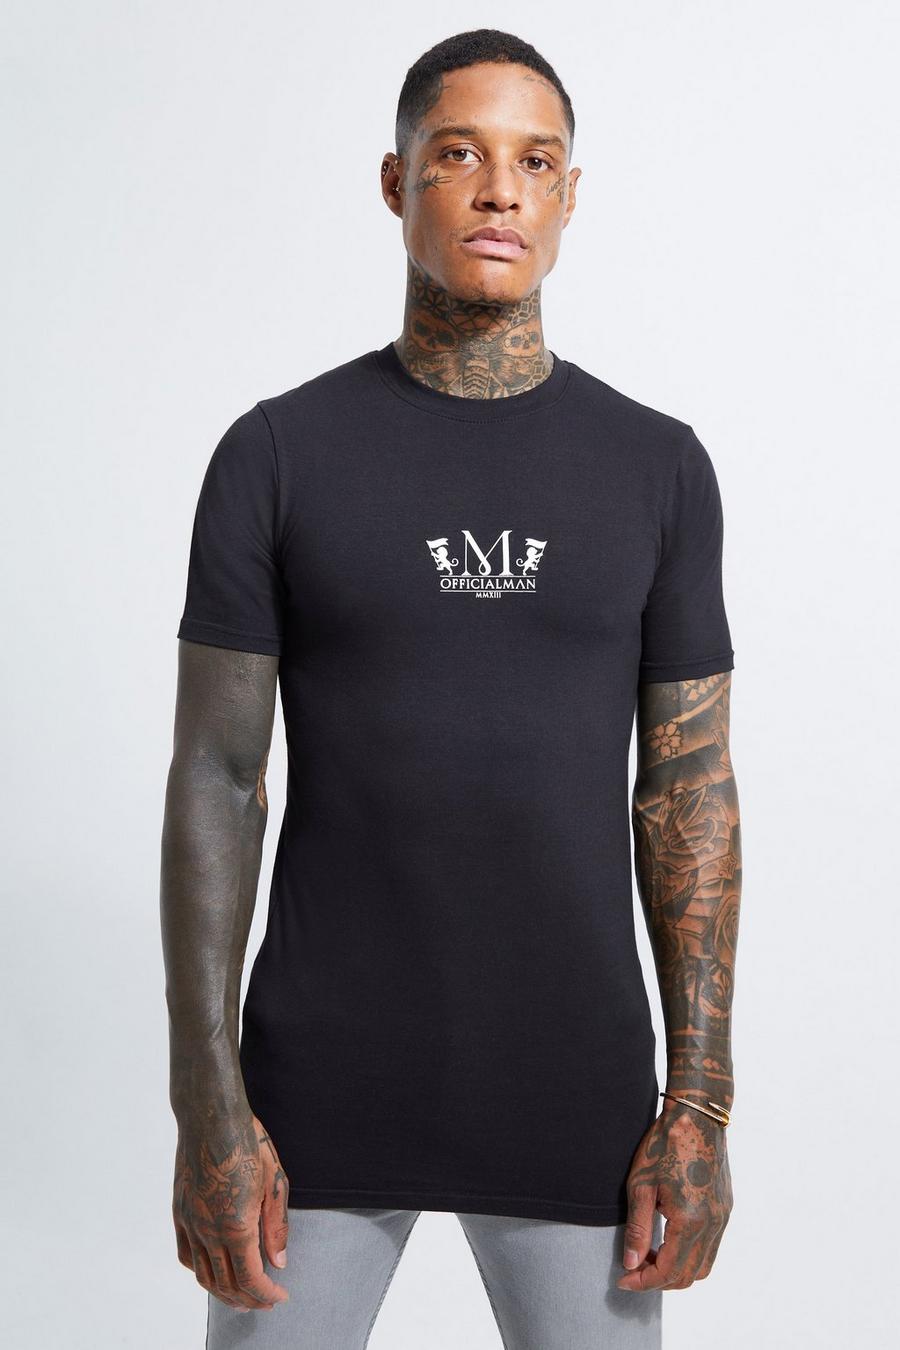 Black Muscle Fit Longline Offical Print T-shirt